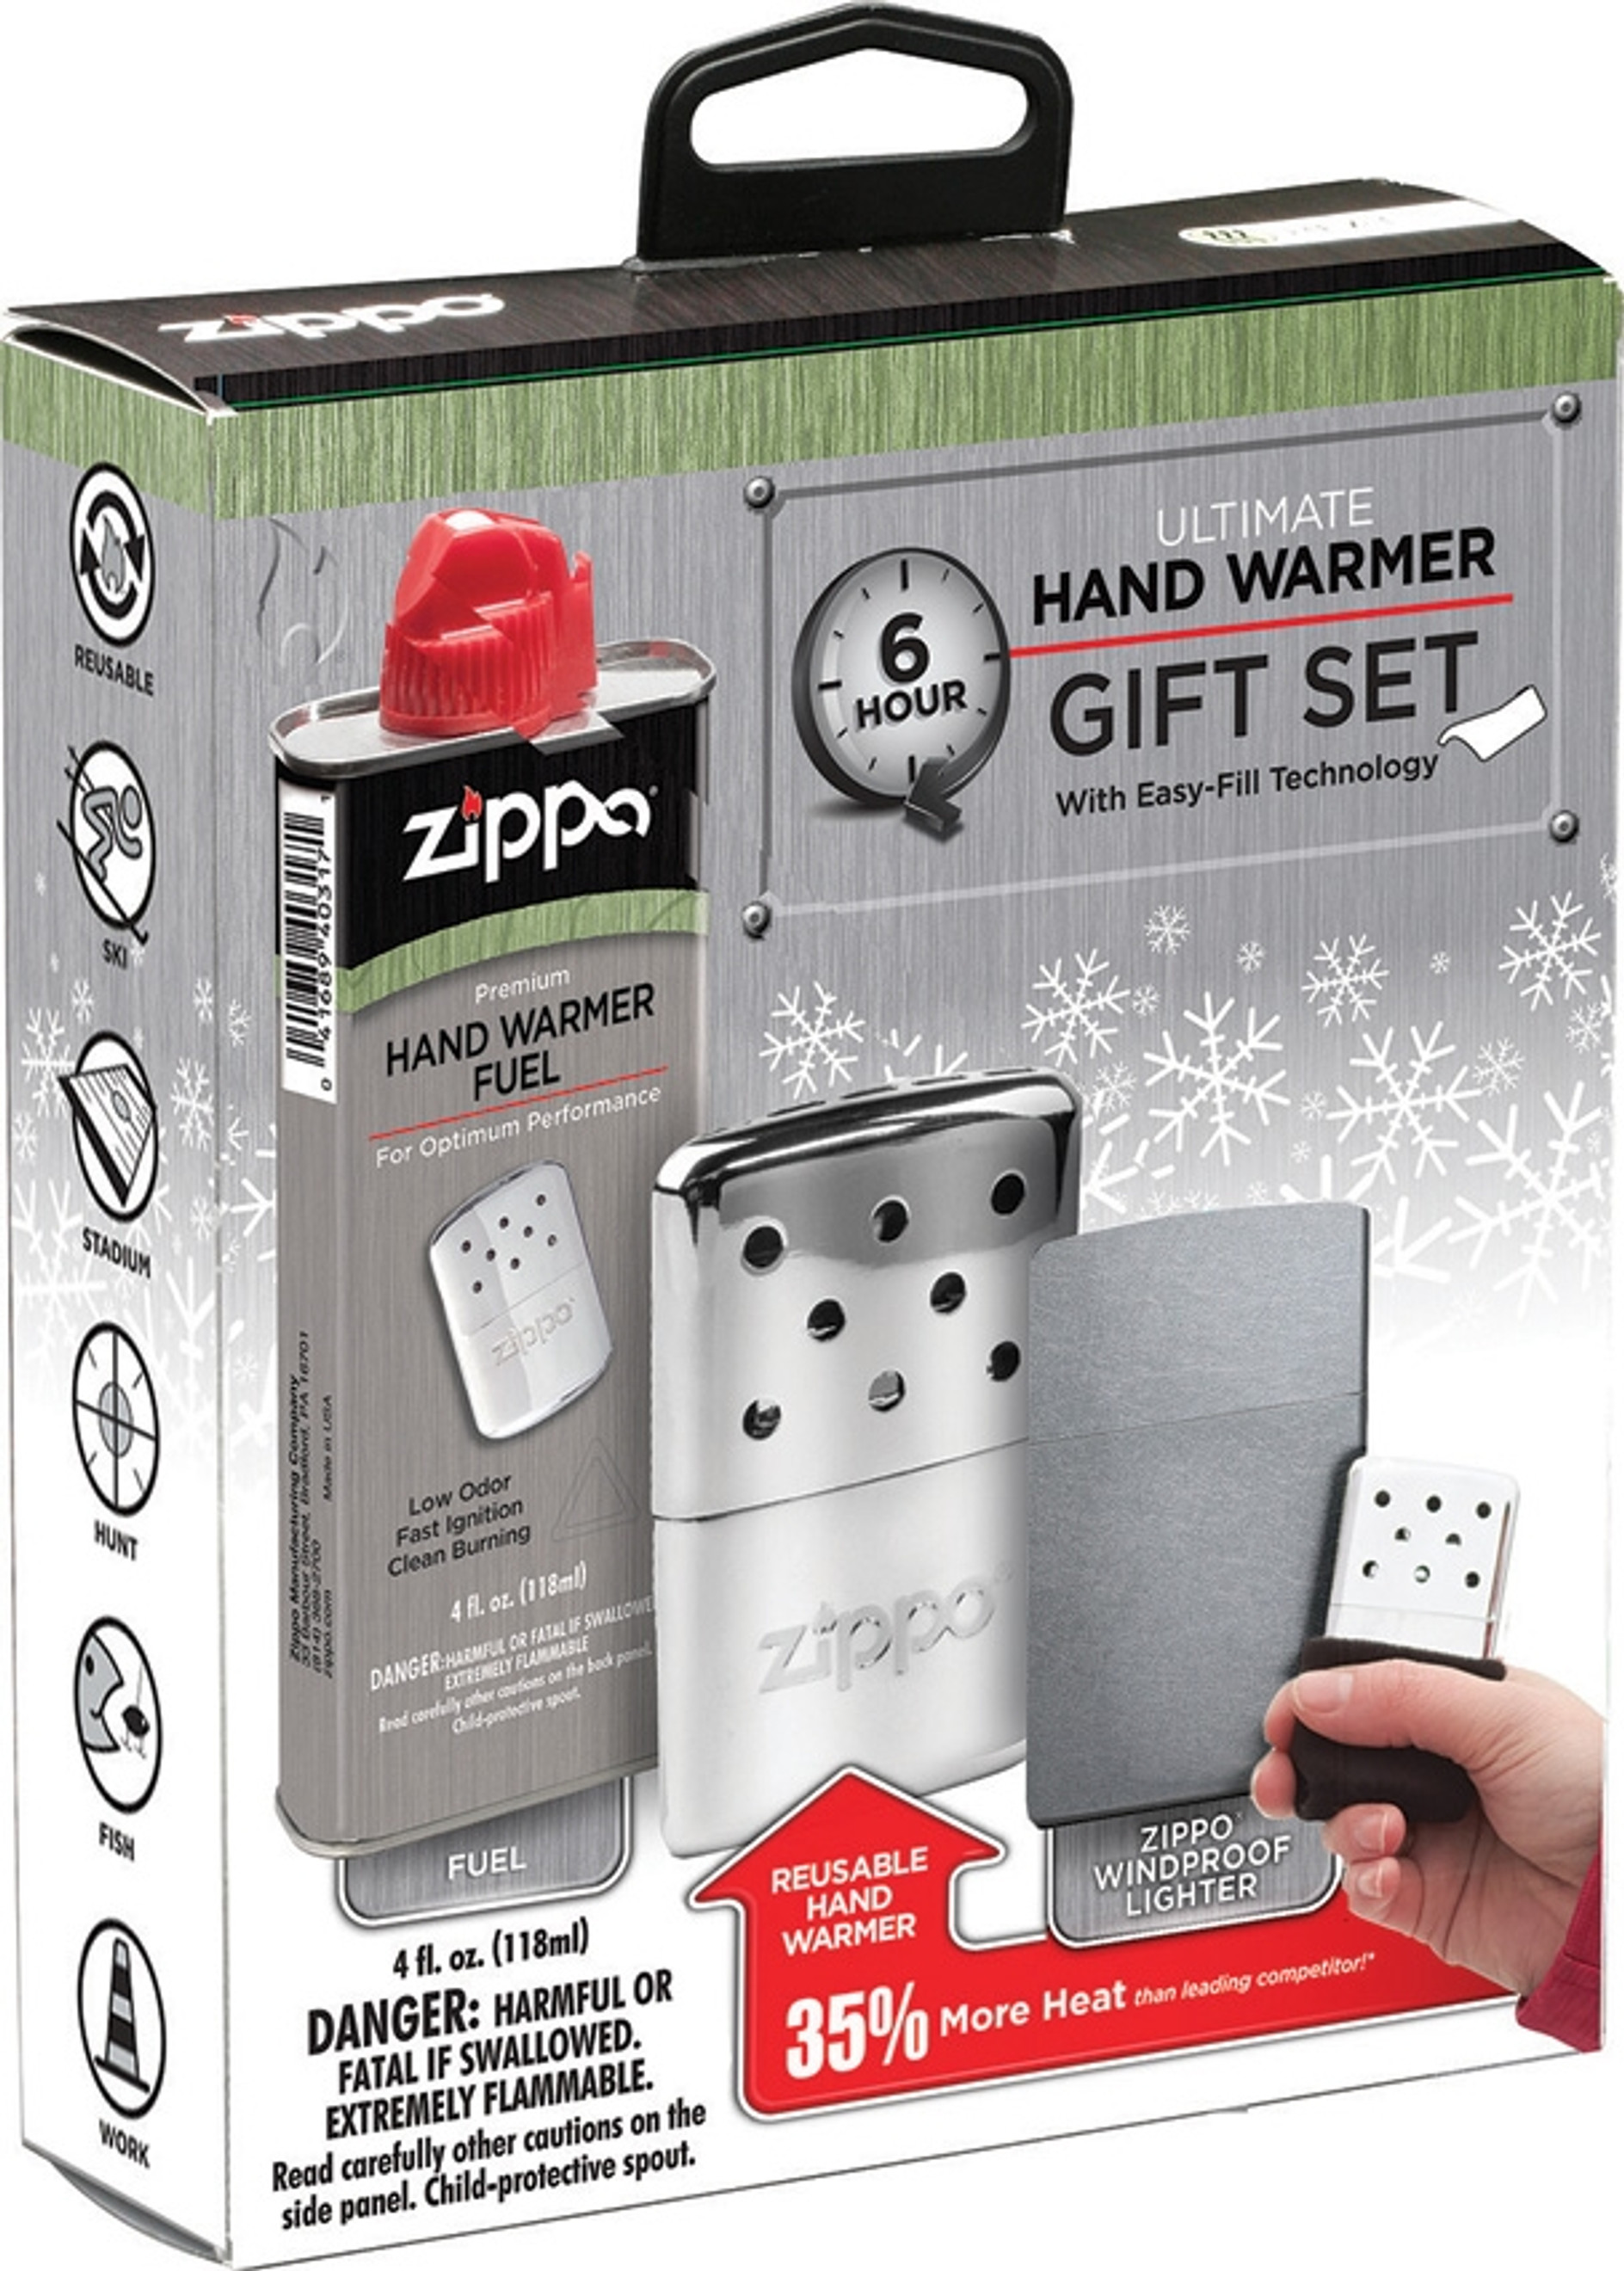 Zippo Hand Warmer Ultimate Gift Set